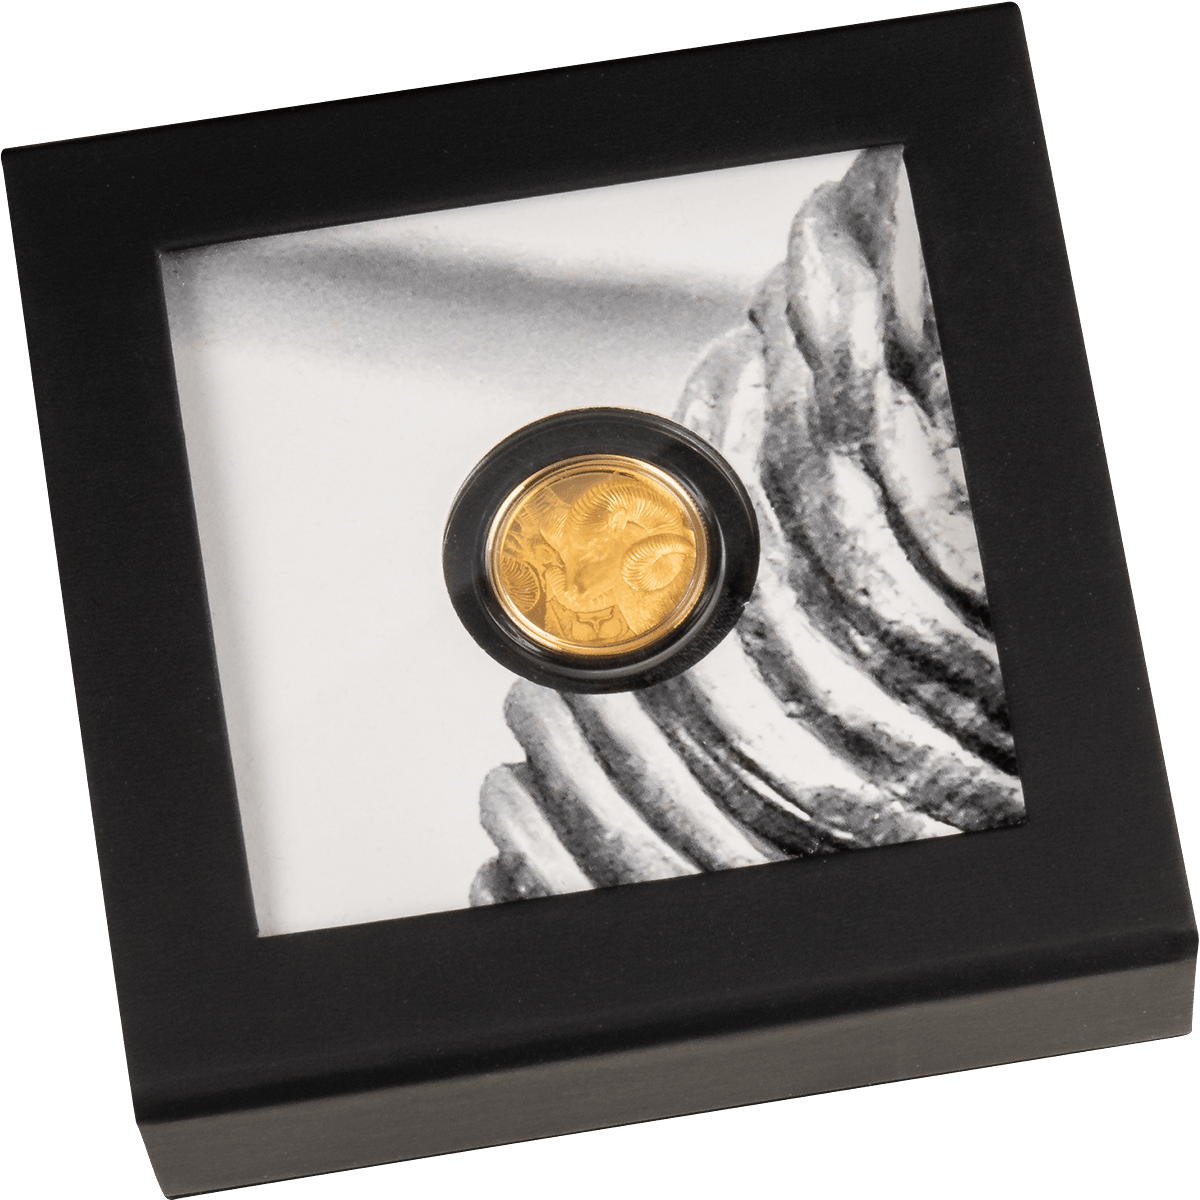 MAGNIFICENT ARGALI Ram Gold Coin 1000 Togrog Mongolia 2022 - PARTHAVA COIN